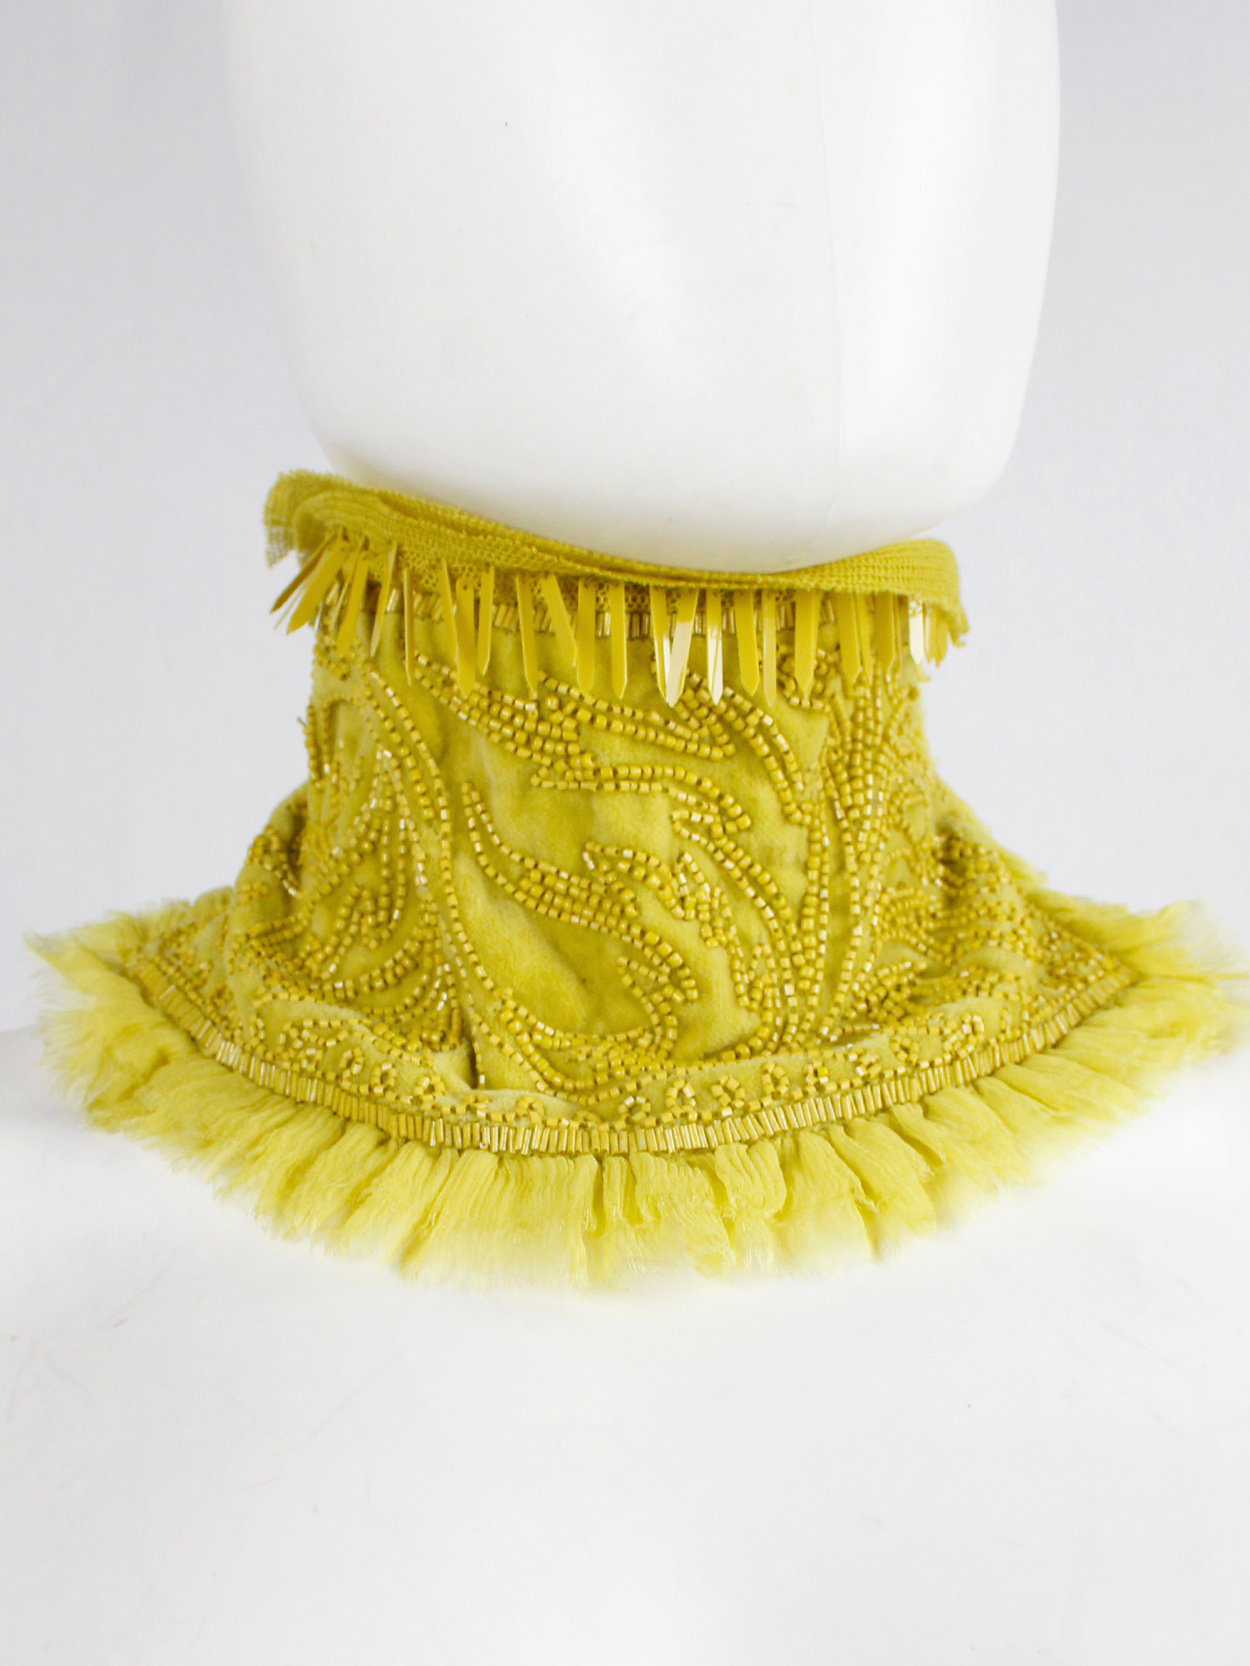 Dries Van Noten yellow beaded Edwardian collar with droplet sequins spring 2017 (8)